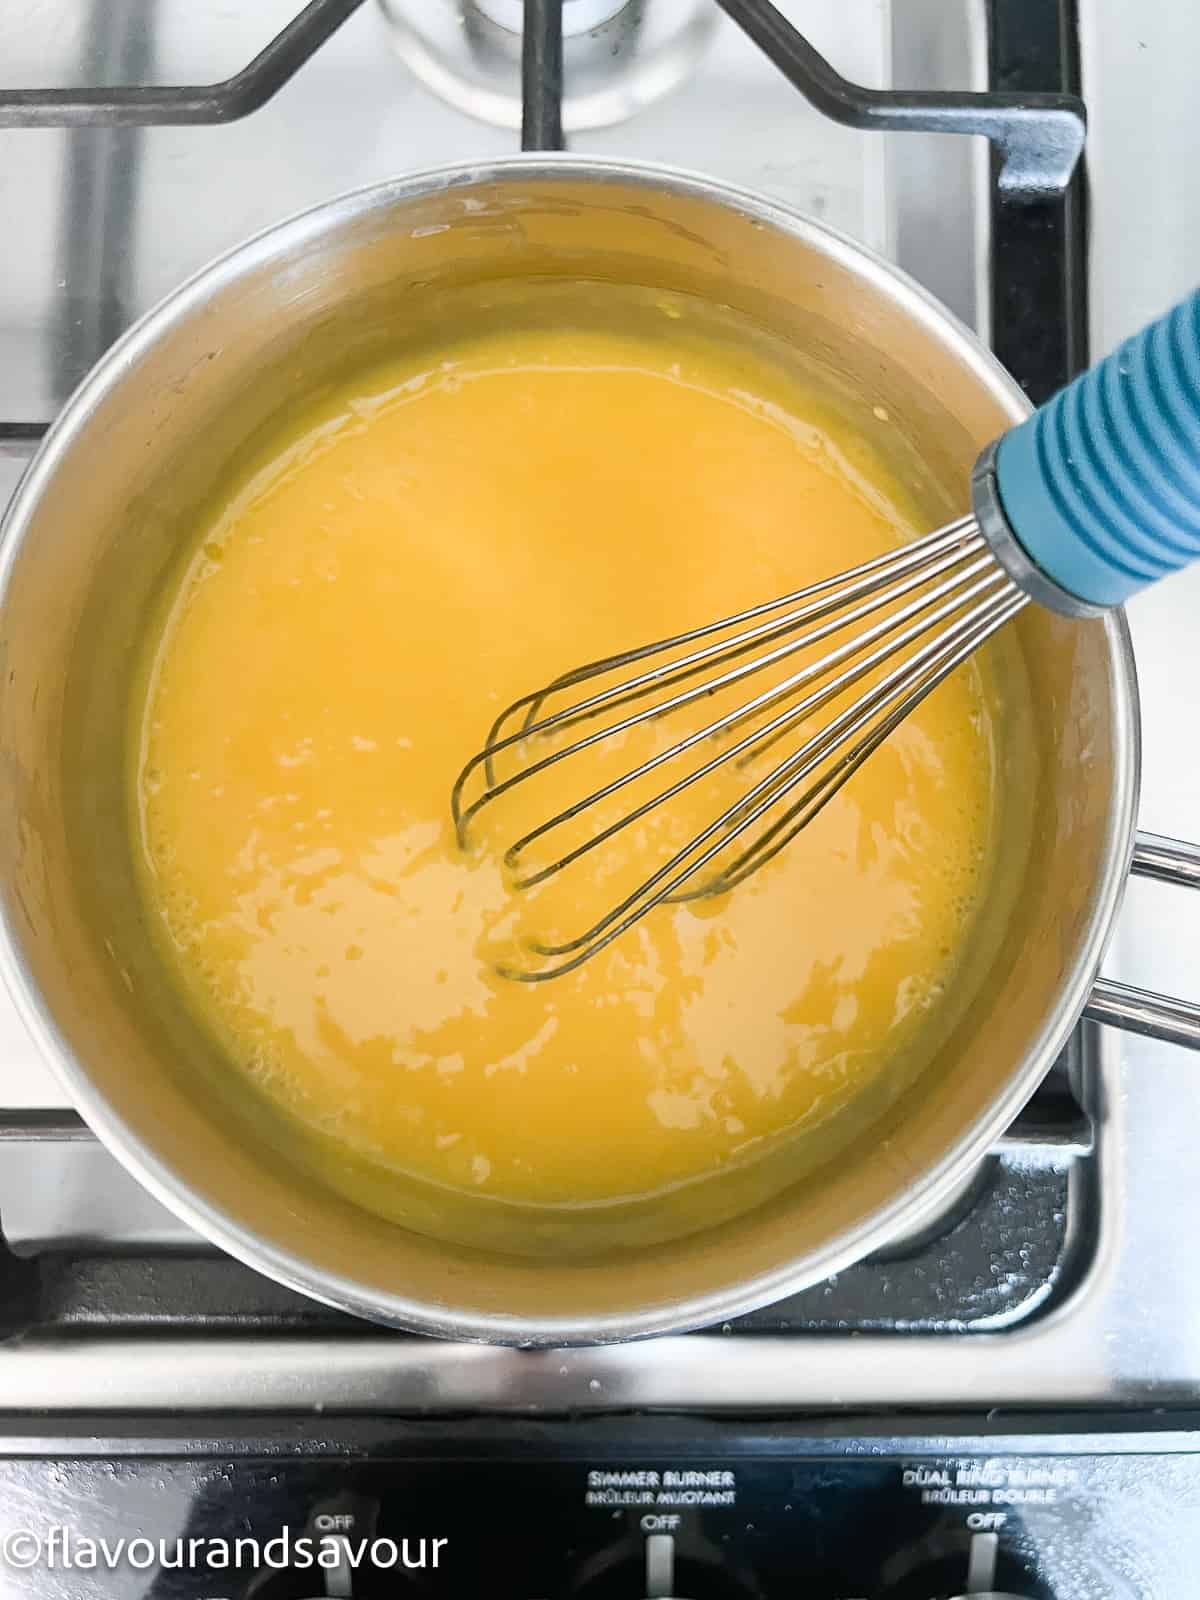 Lemon curd thickening in a saucepan.